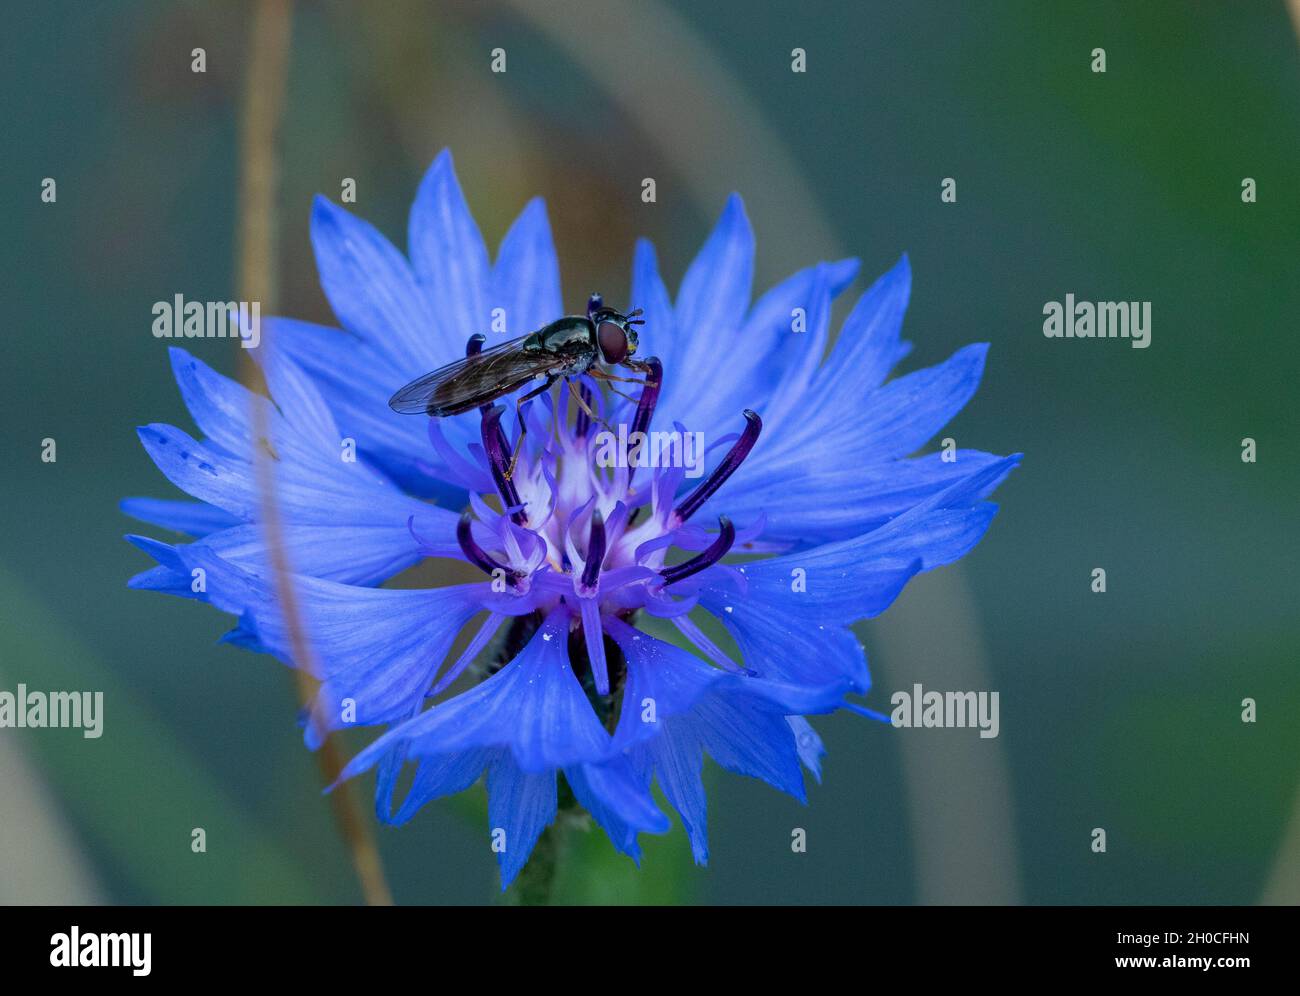 Platycheirus albimanus hoverfly on cornflower Stock Photo